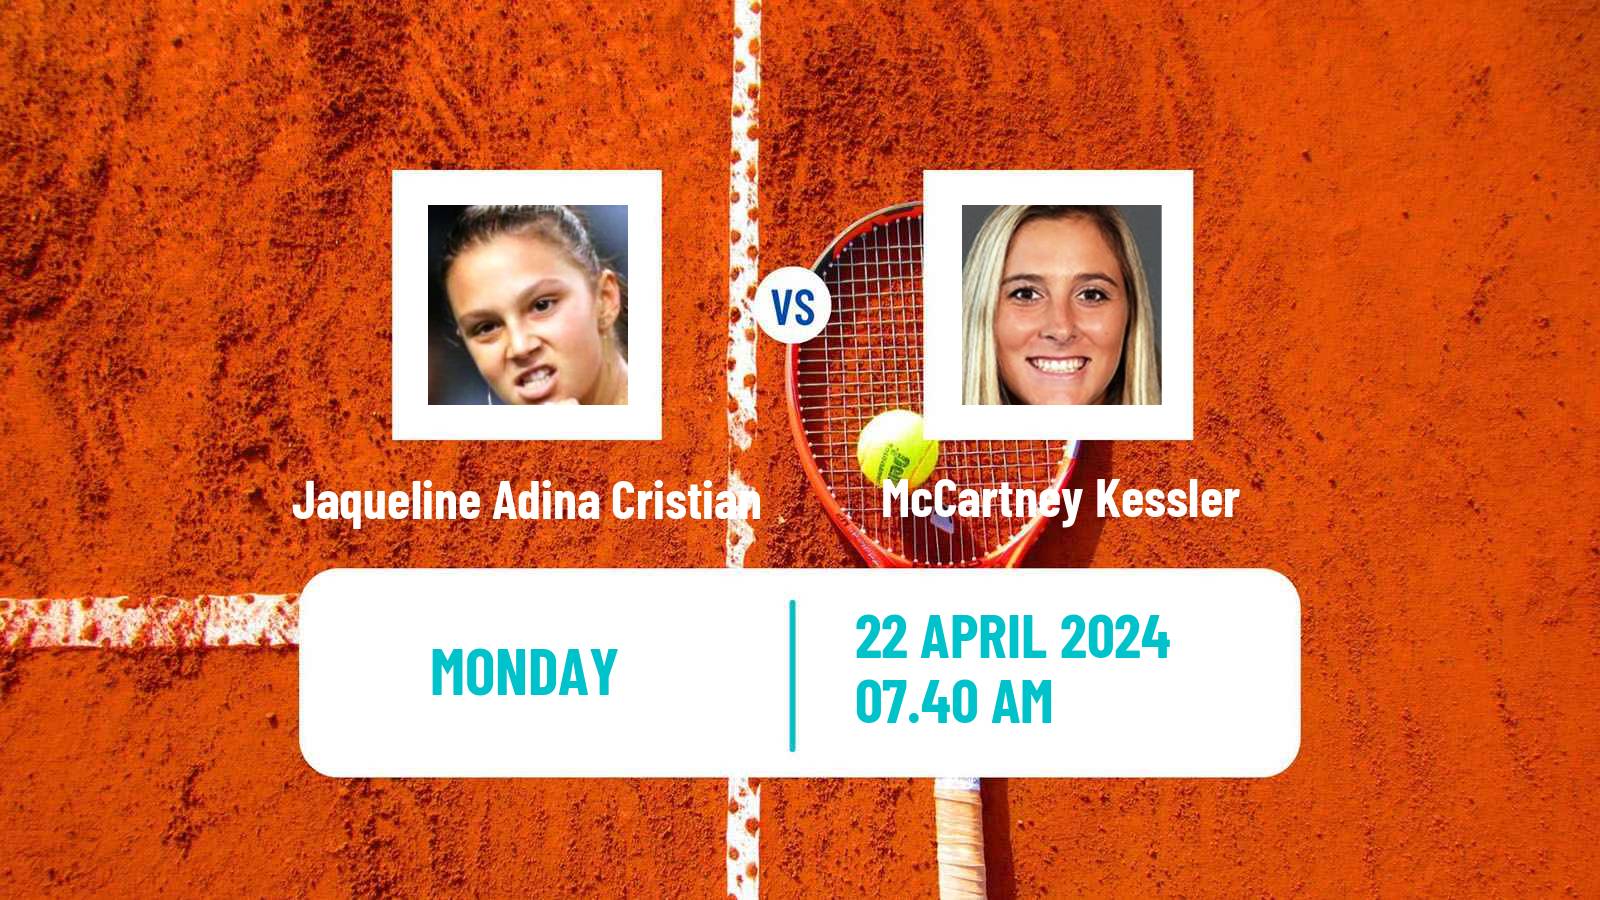 Tennis WTA Madrid Jaqueline Adina Cristian - McCartney Kessler